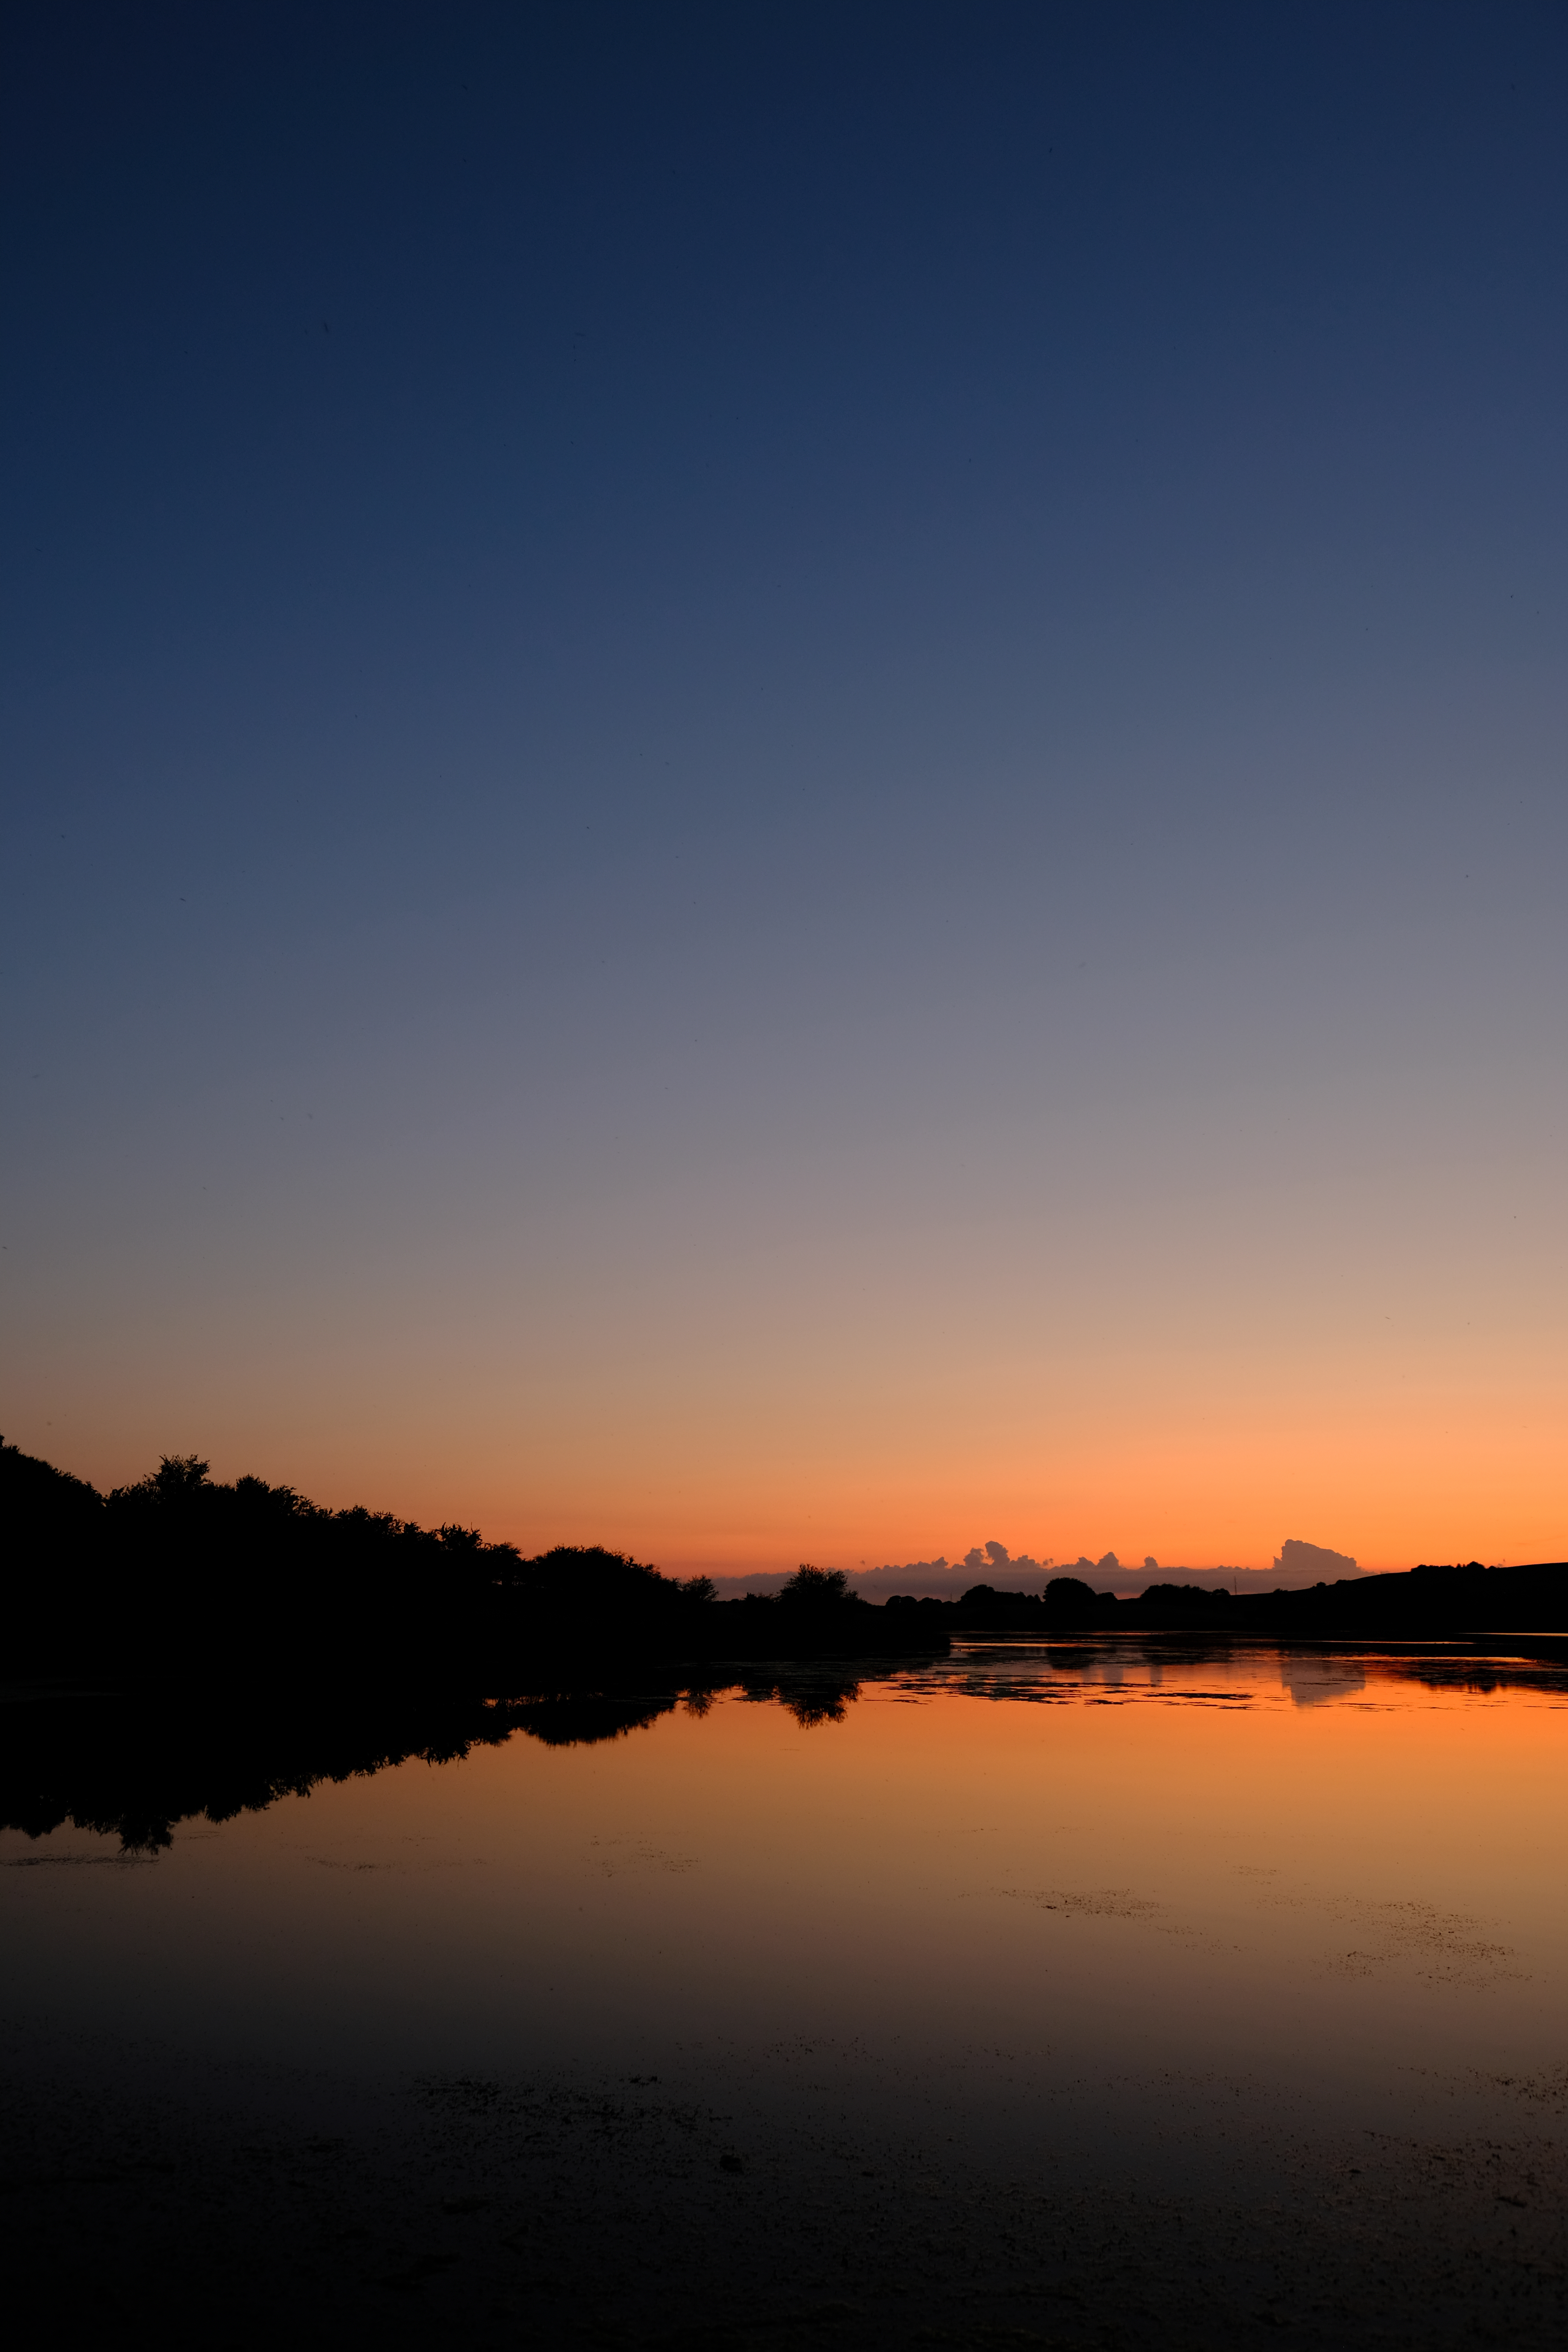 Download background twilight, landscape, nature, sunset, lake, dark, dusk